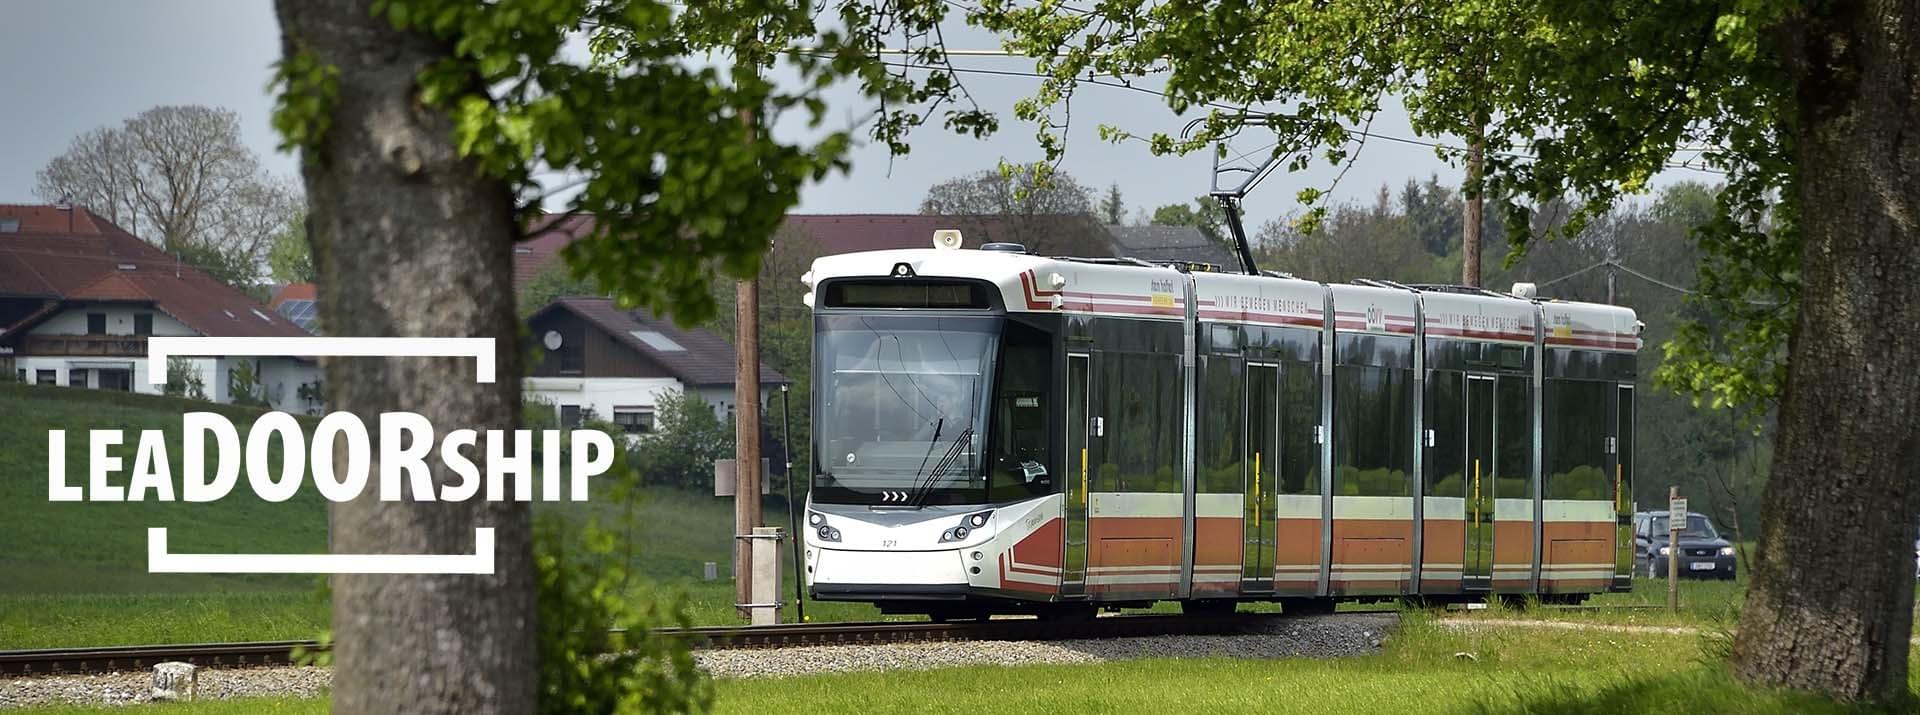 Tram in green urban environment